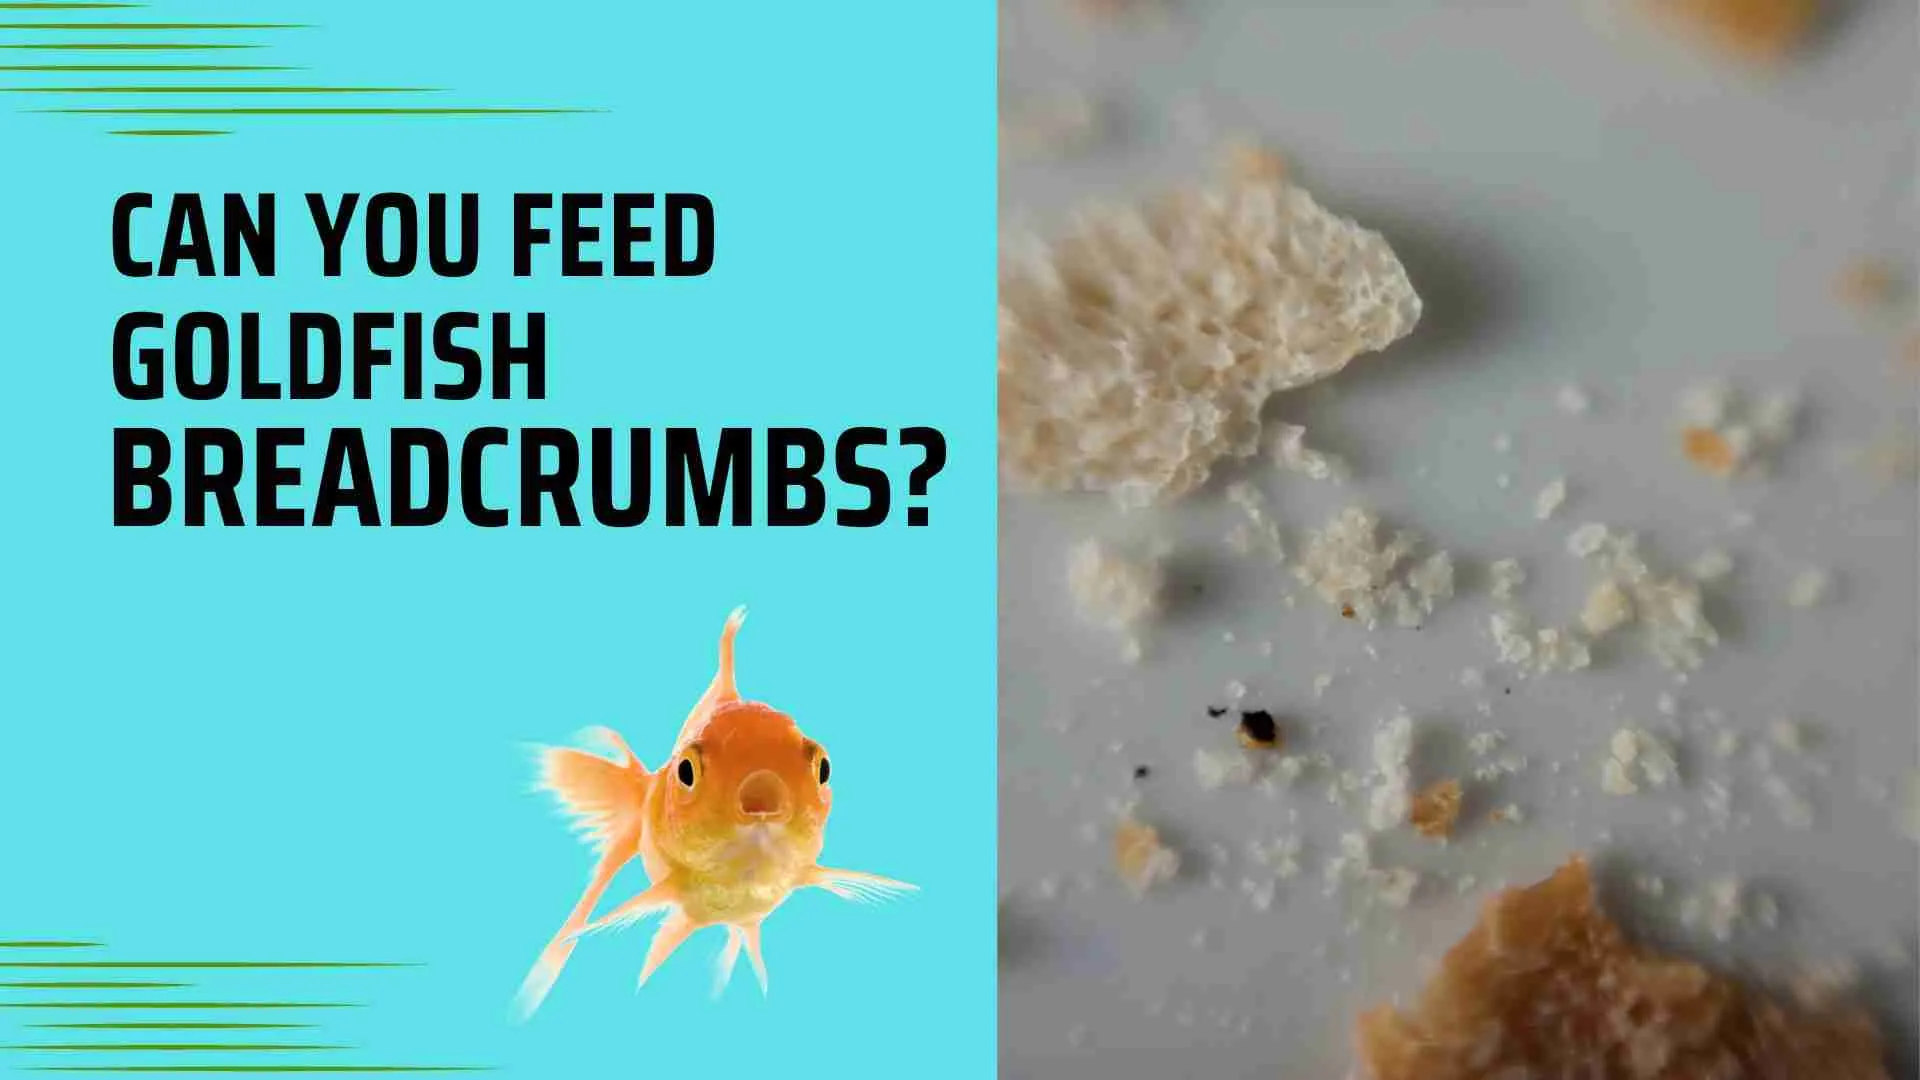 Can you feed goldfish breadcrumbs